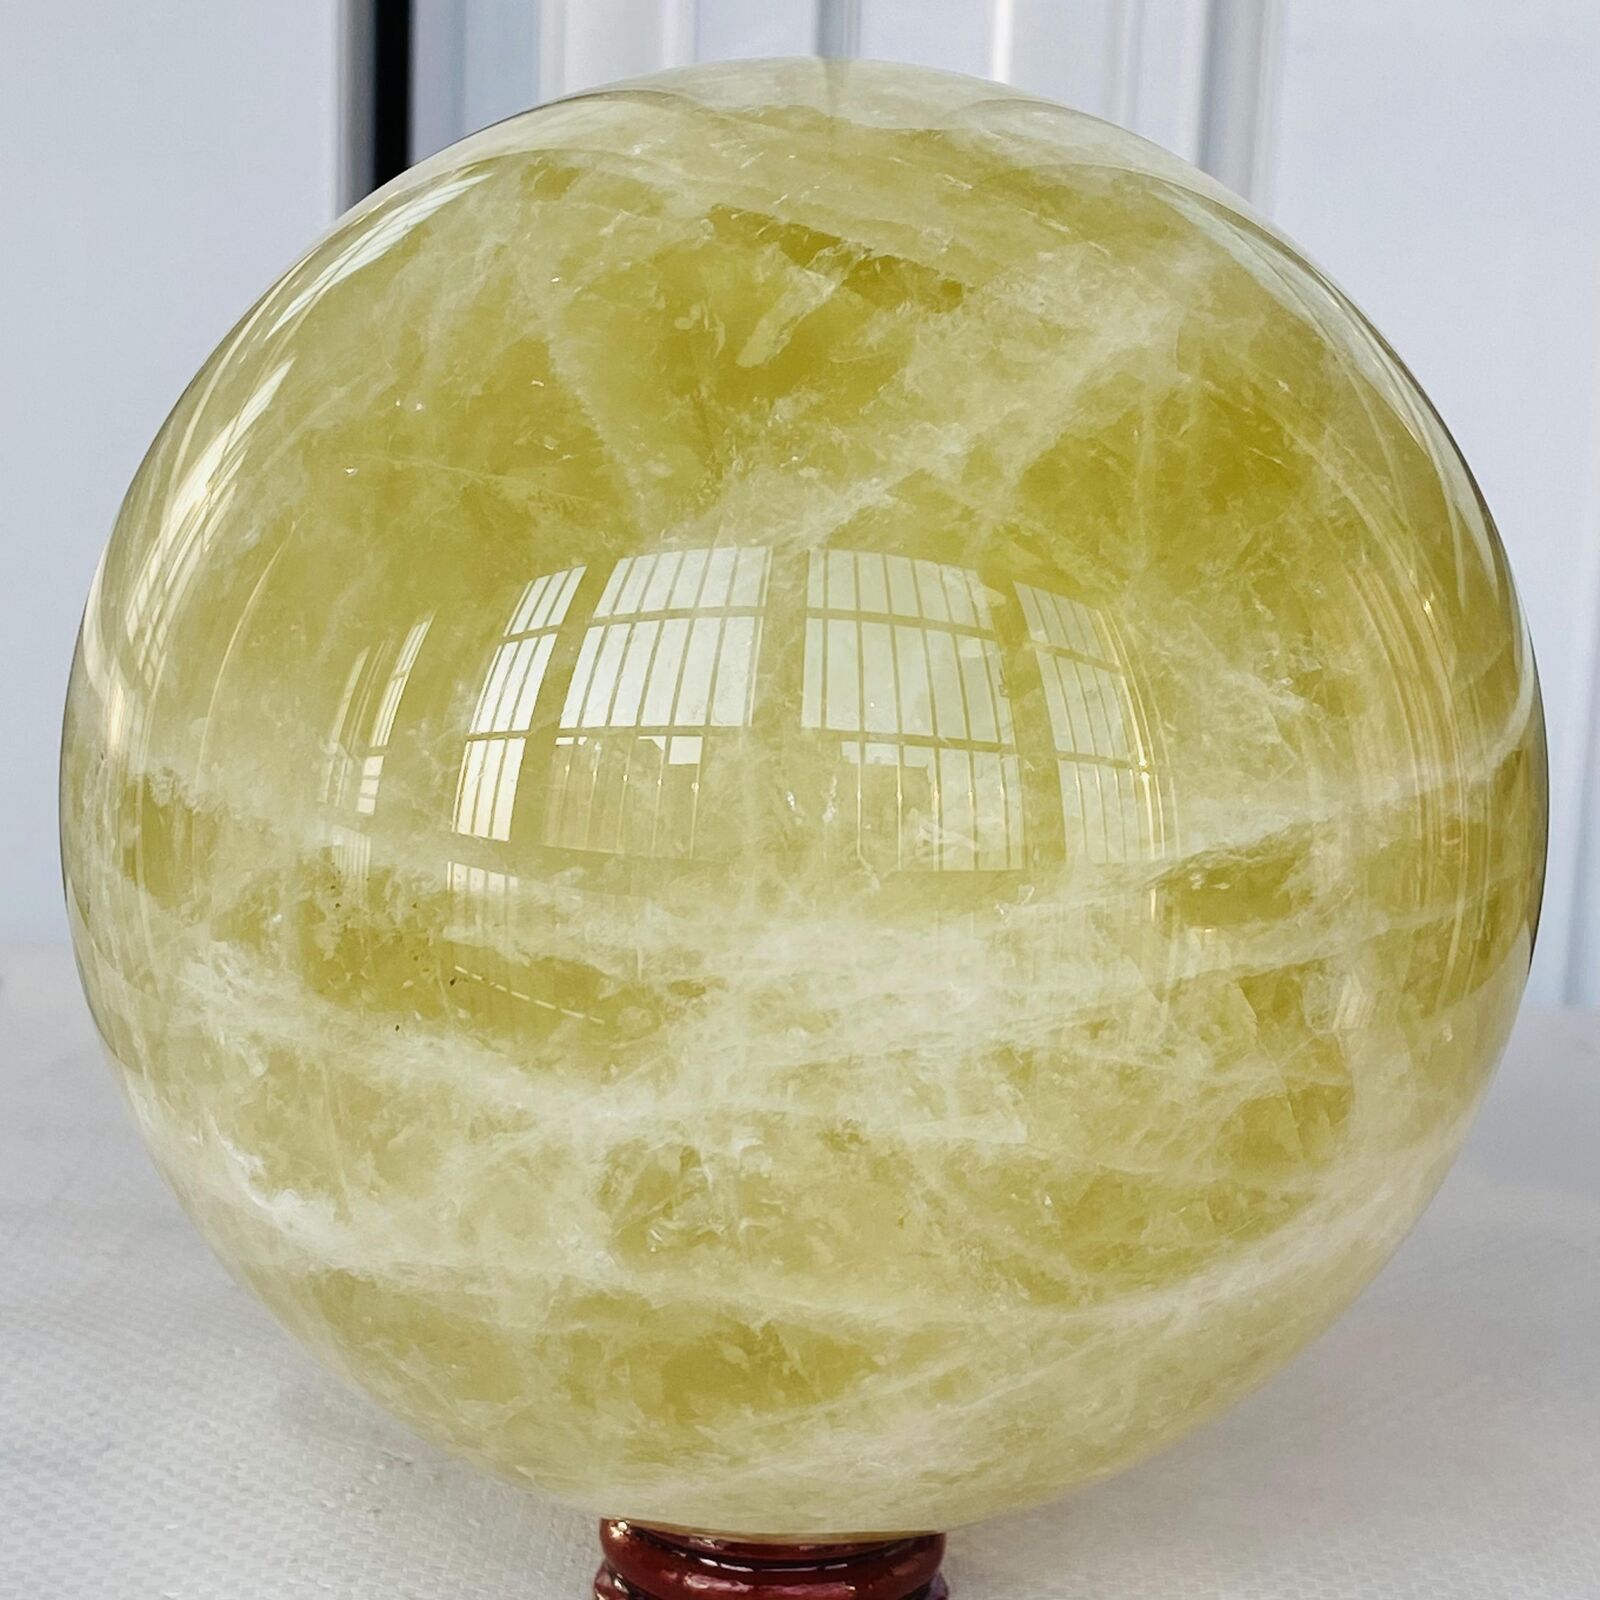 3720g Natural yellow crystal quartz ball crystal ball sphere healing